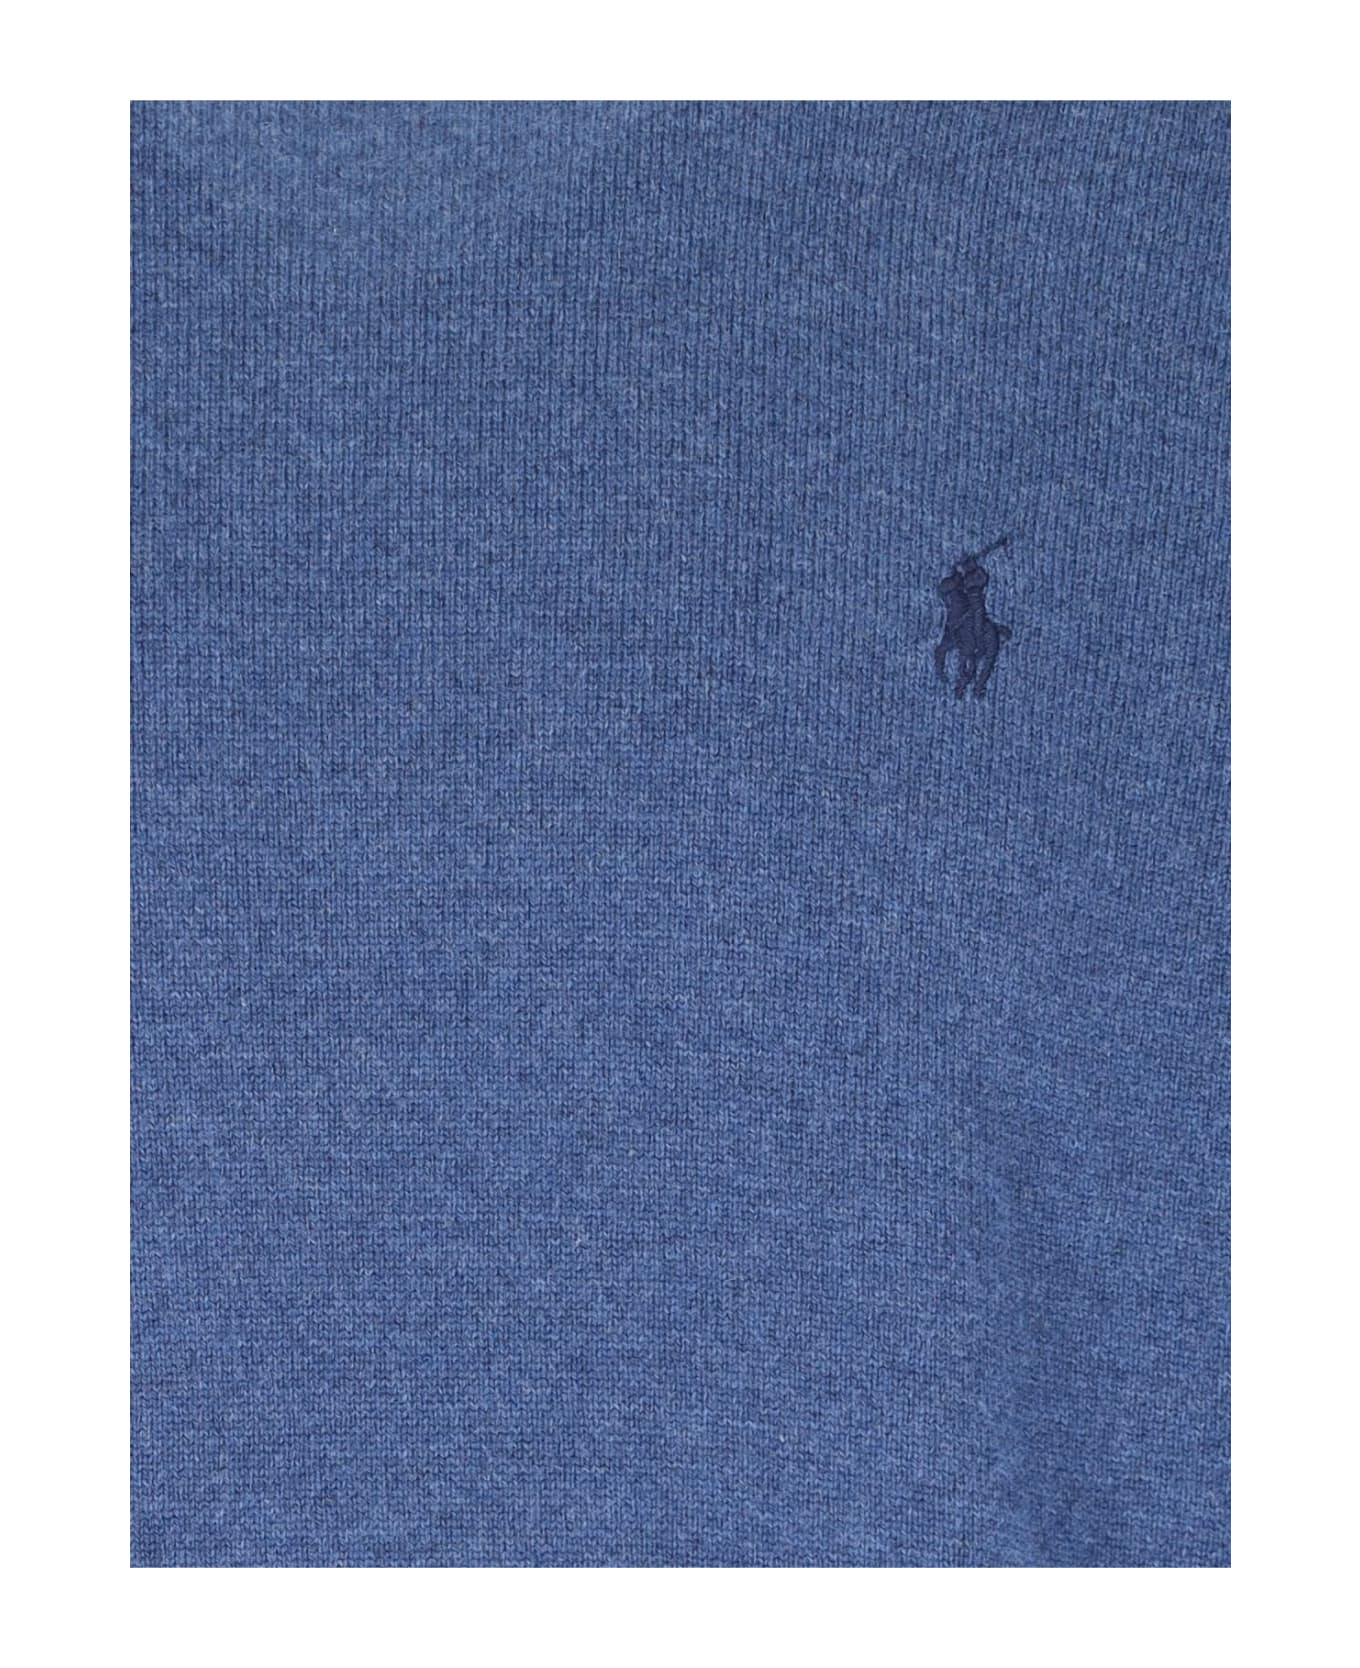 Ralph Lauren Logo Sweater - NAVY